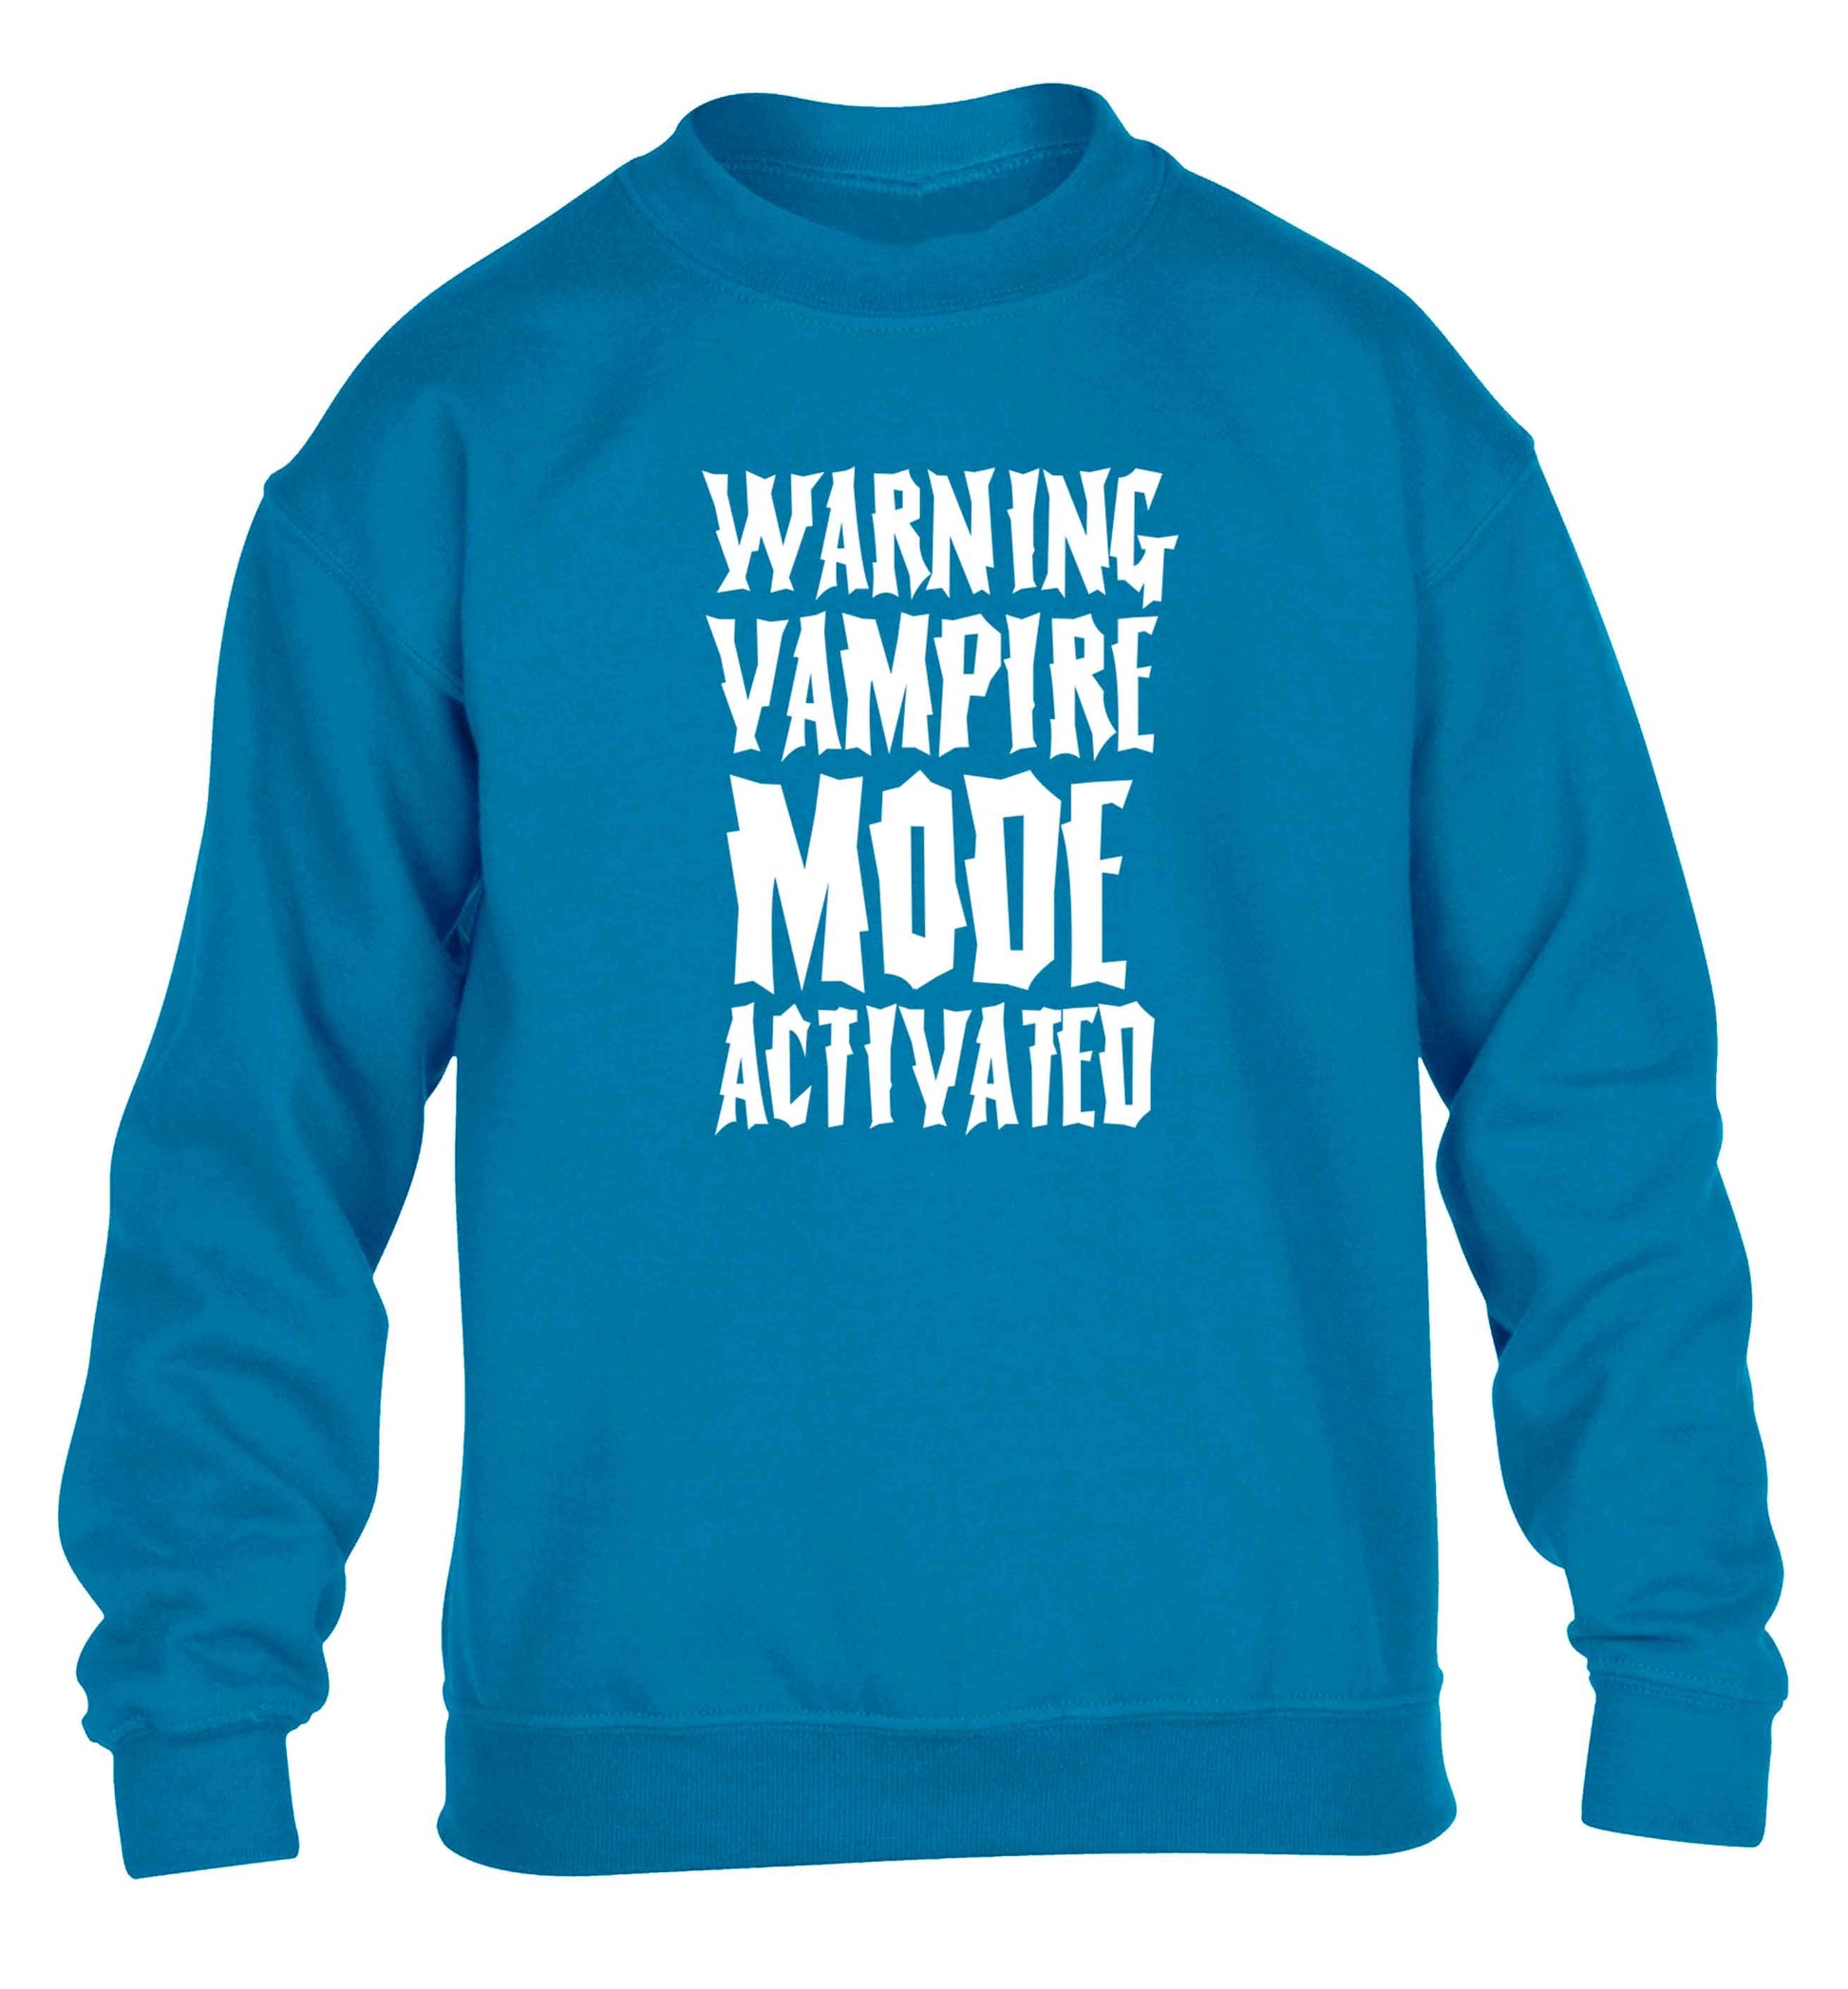 Warning vampire mode activated children's blue sweater 12-13 Years